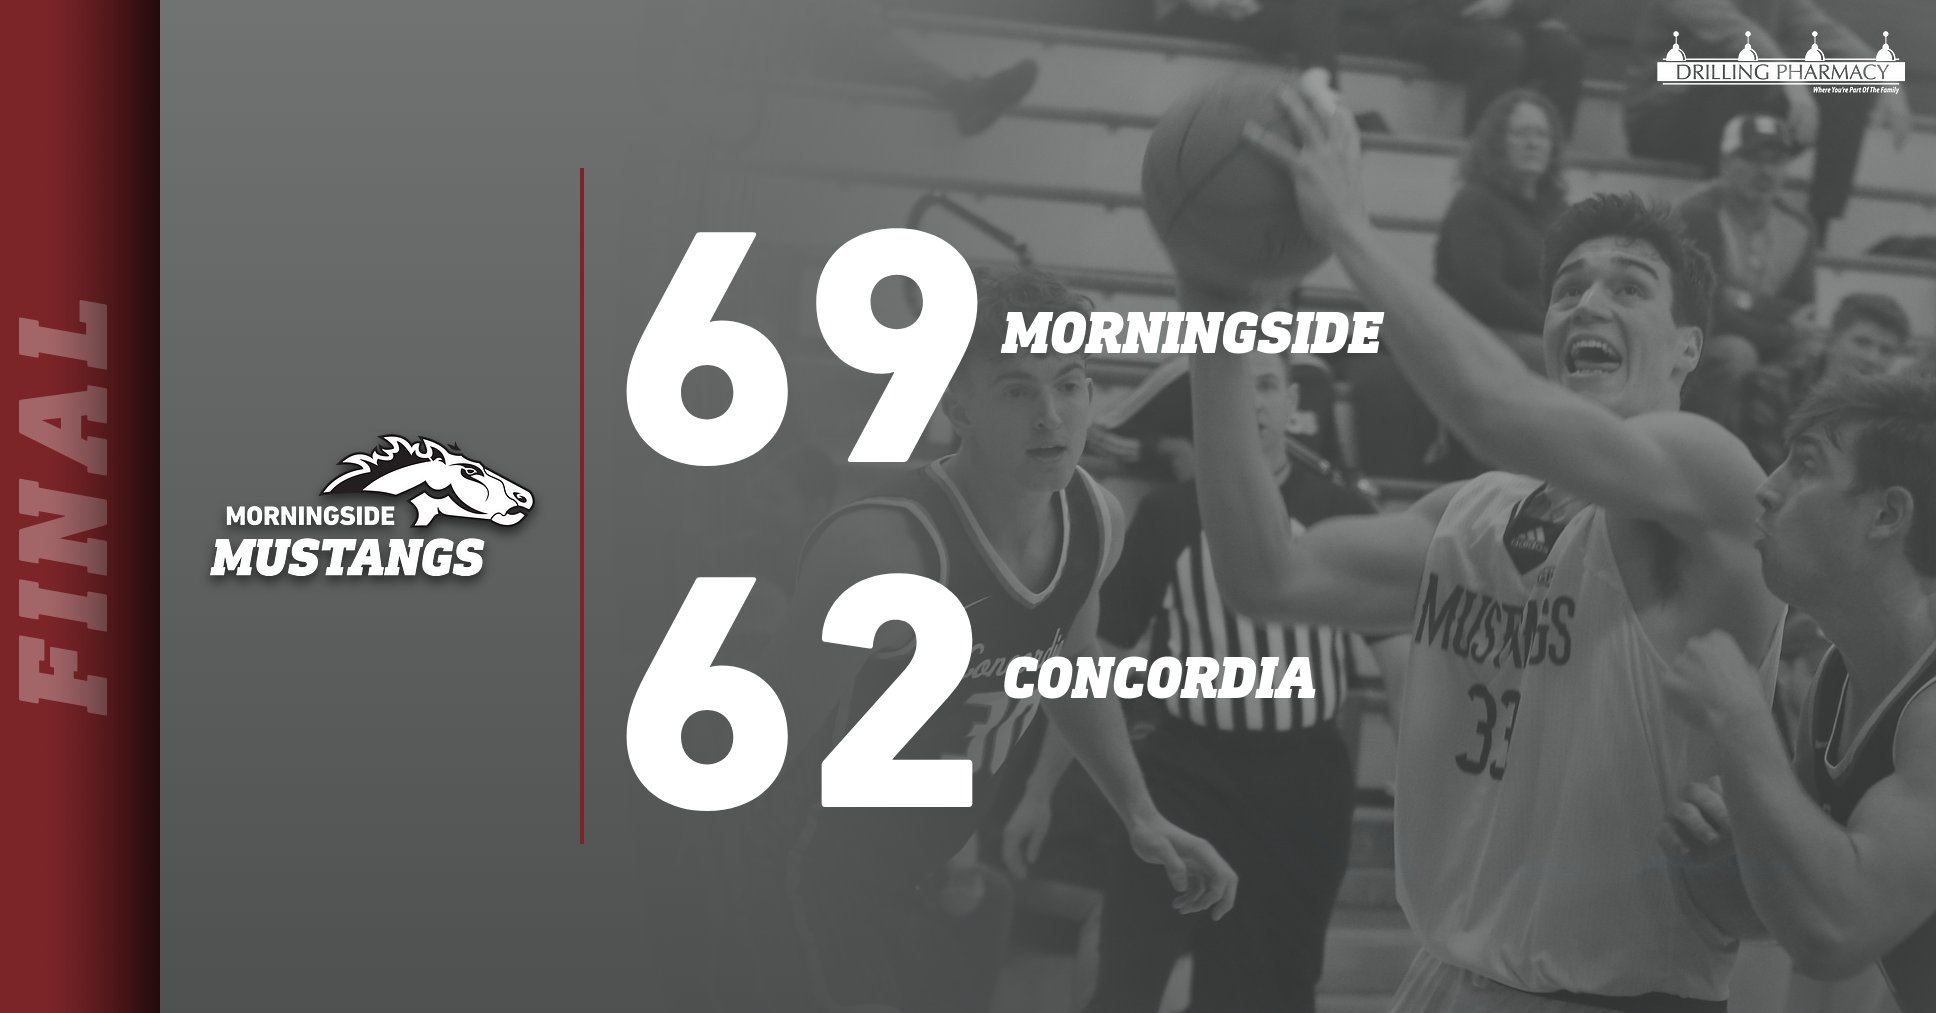 Morningside defeats Concordia in Men's Basketball, 69-62.